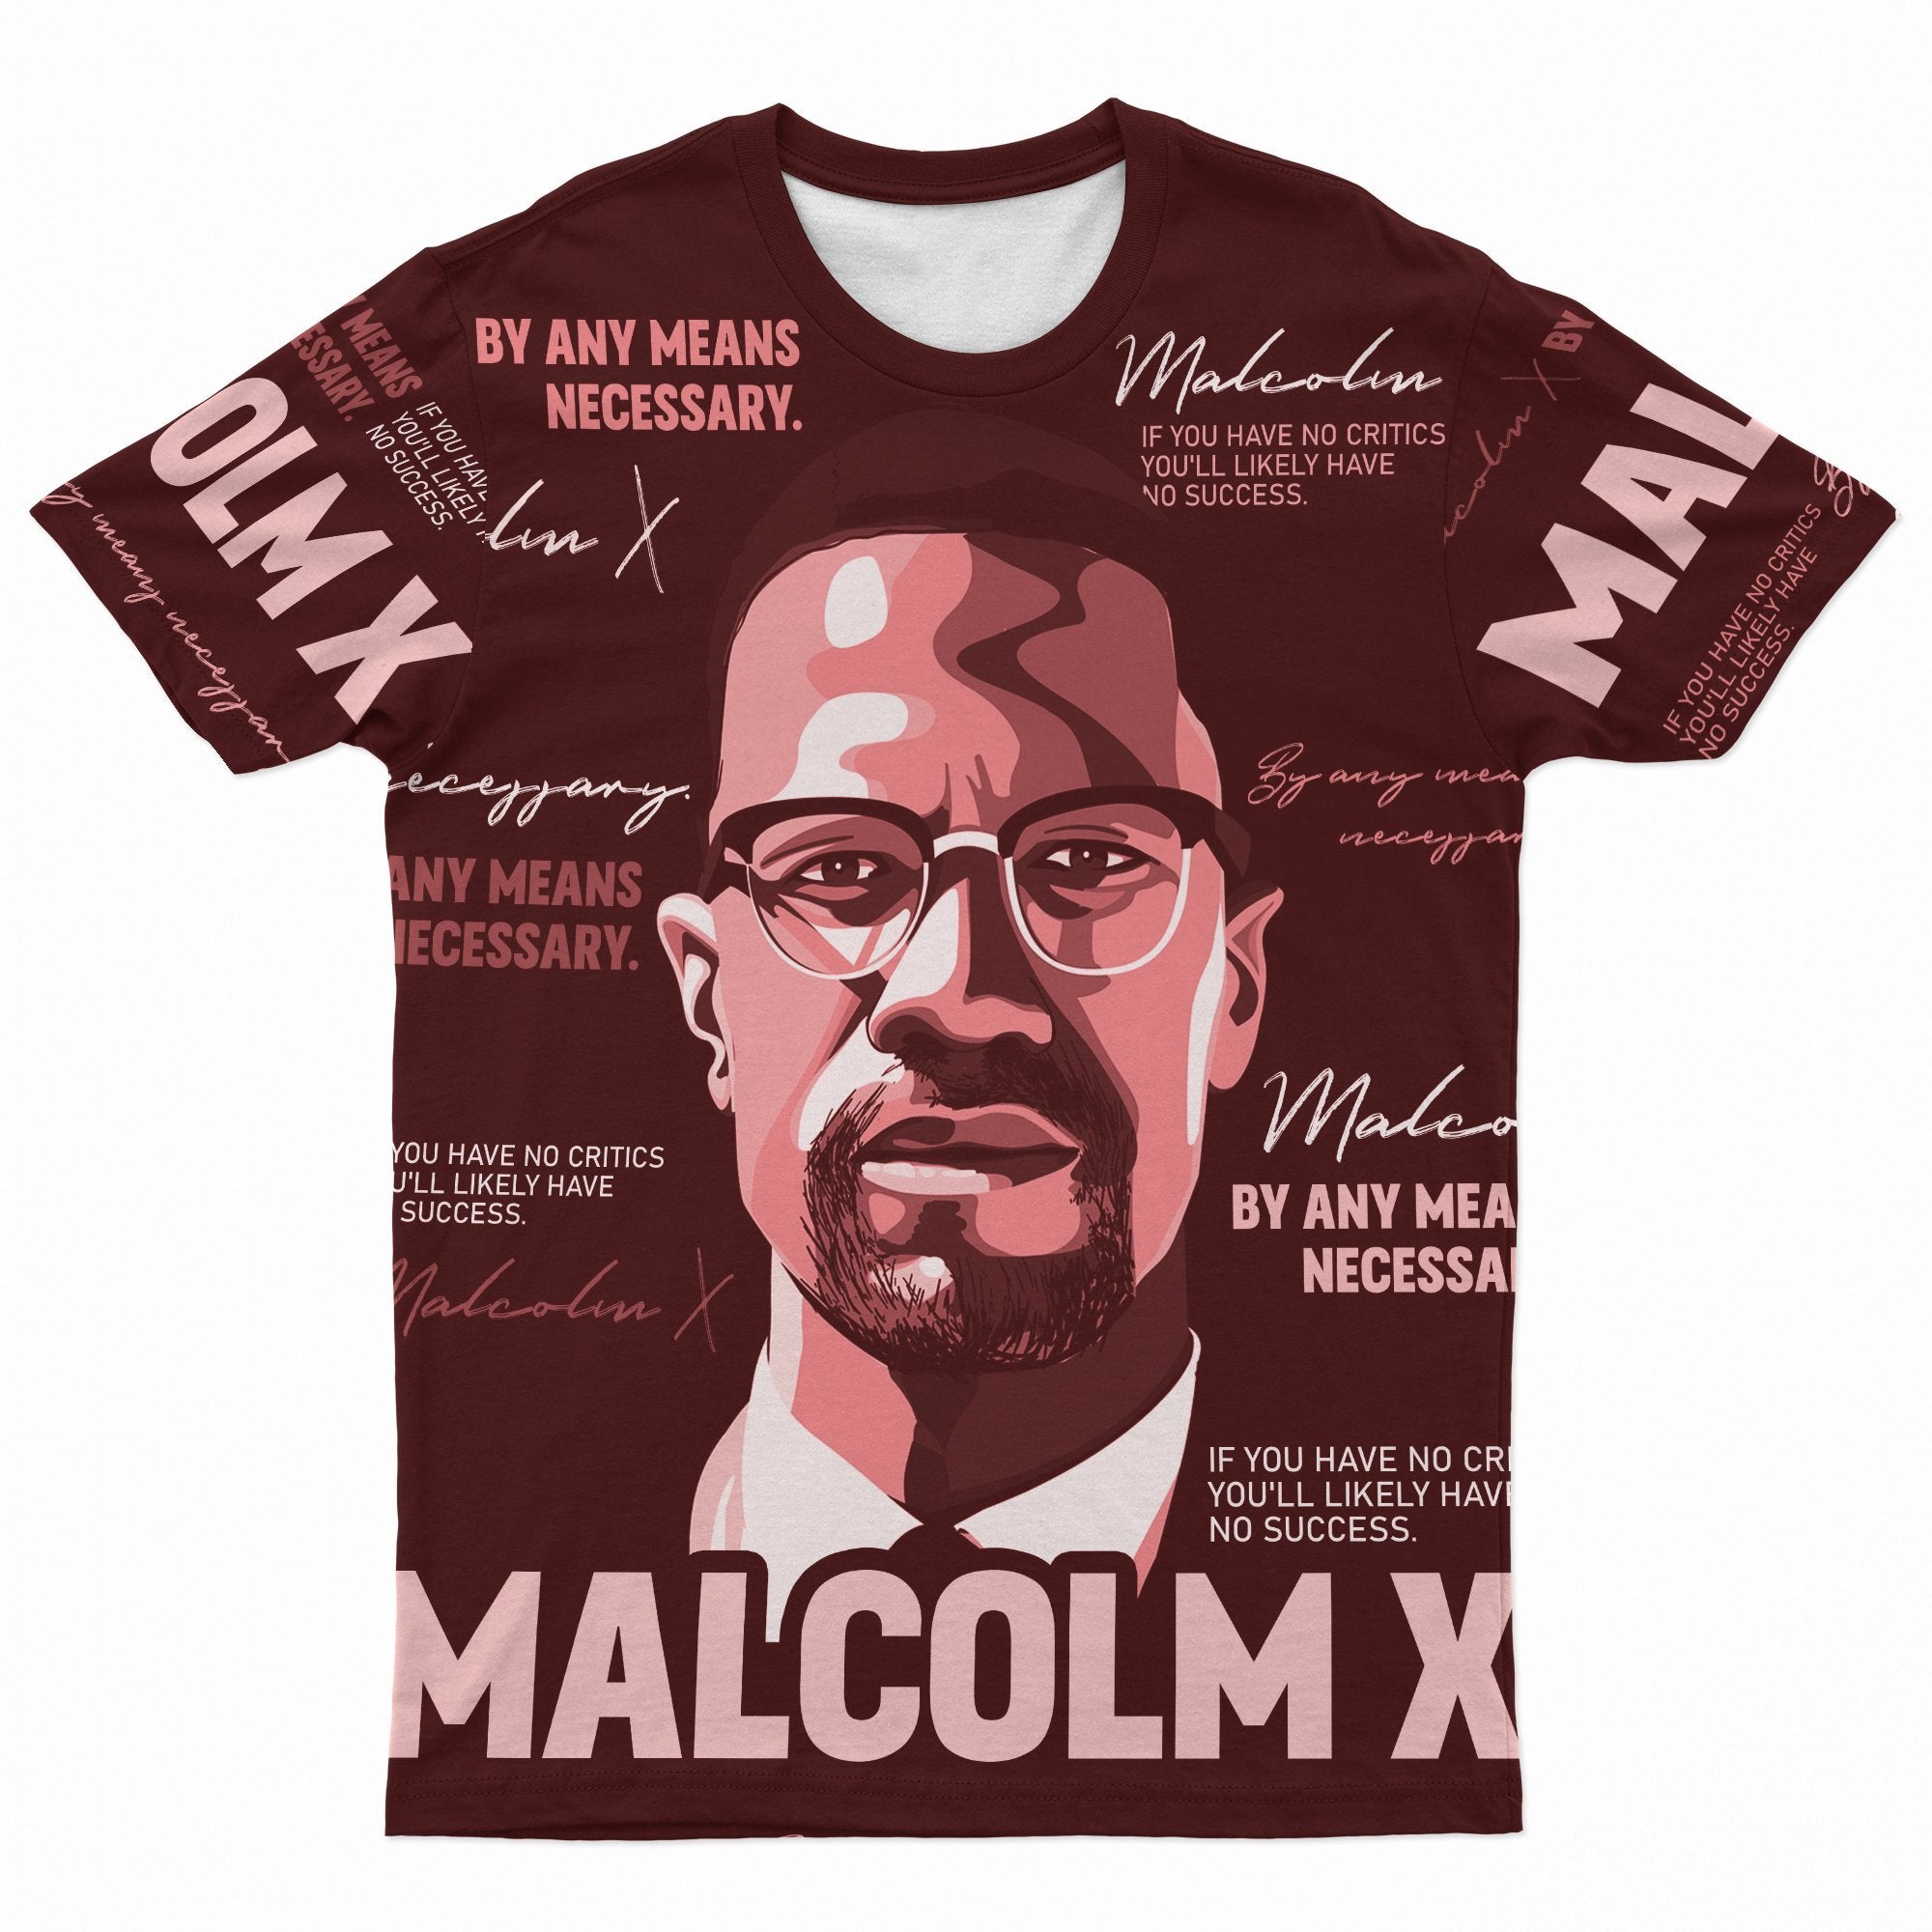 wonder-print-shop-t-shirt-malcolm-x-t-shirt